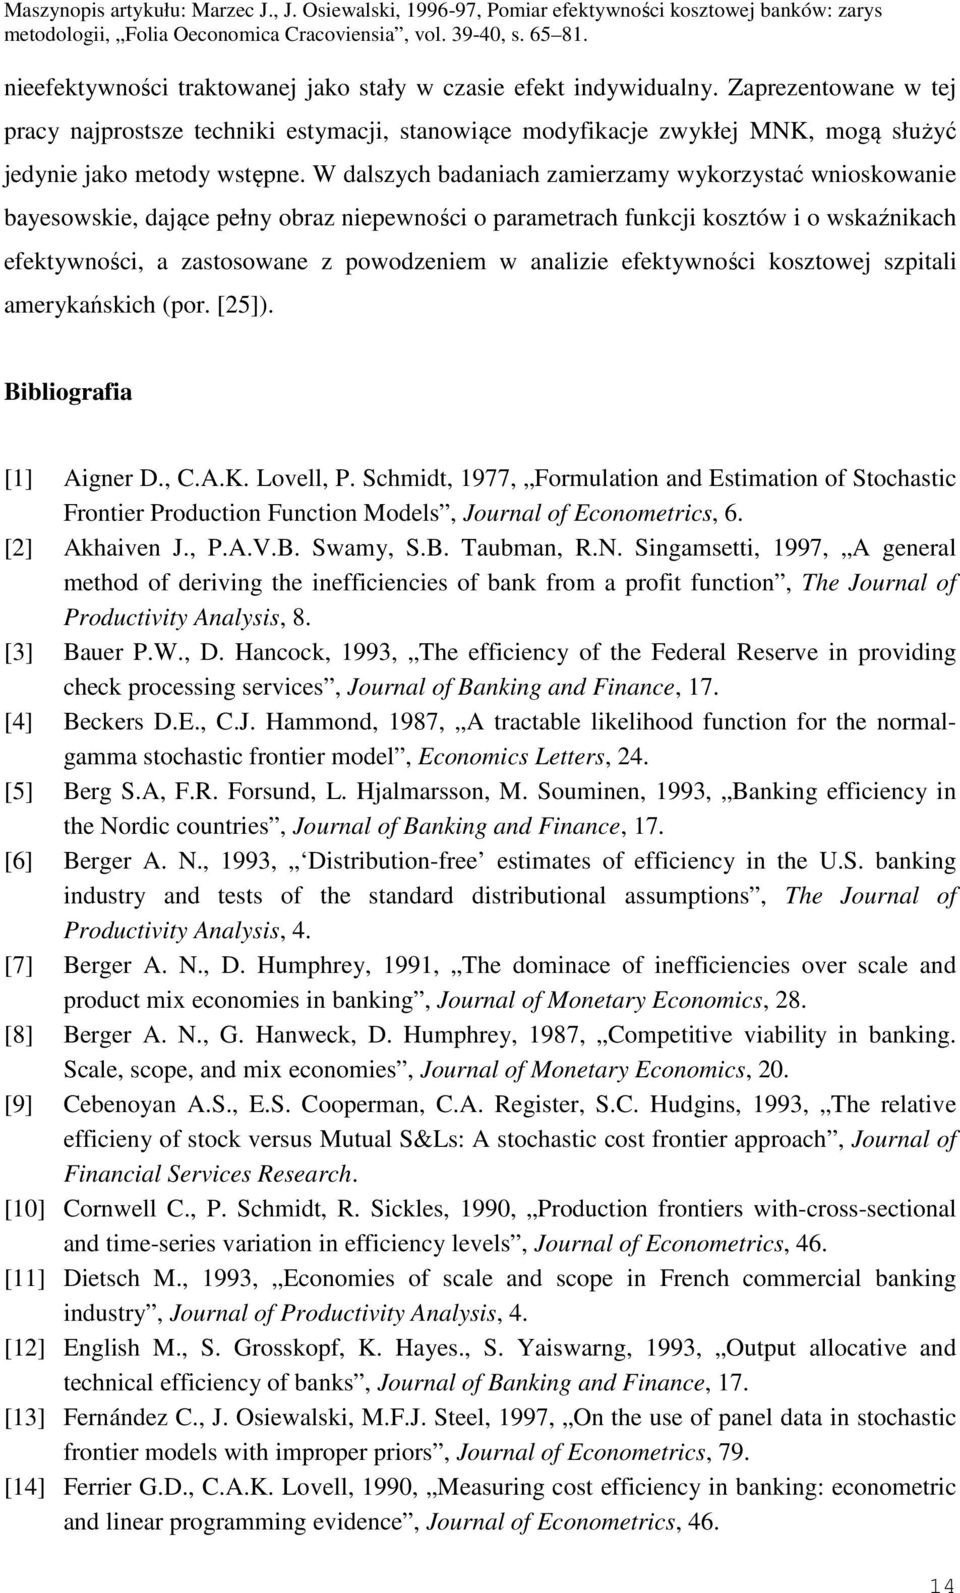 szptal amerykańskc (por. [25]). Bblografa [] Agner D., C.A.K. Lovell, P. Scmdt, 977, Formulaton and Estmaton of Stocastc Fronter Producton Functon Models, Journal of Econometrcs, 6. [2] Akaven J., P.A.V.